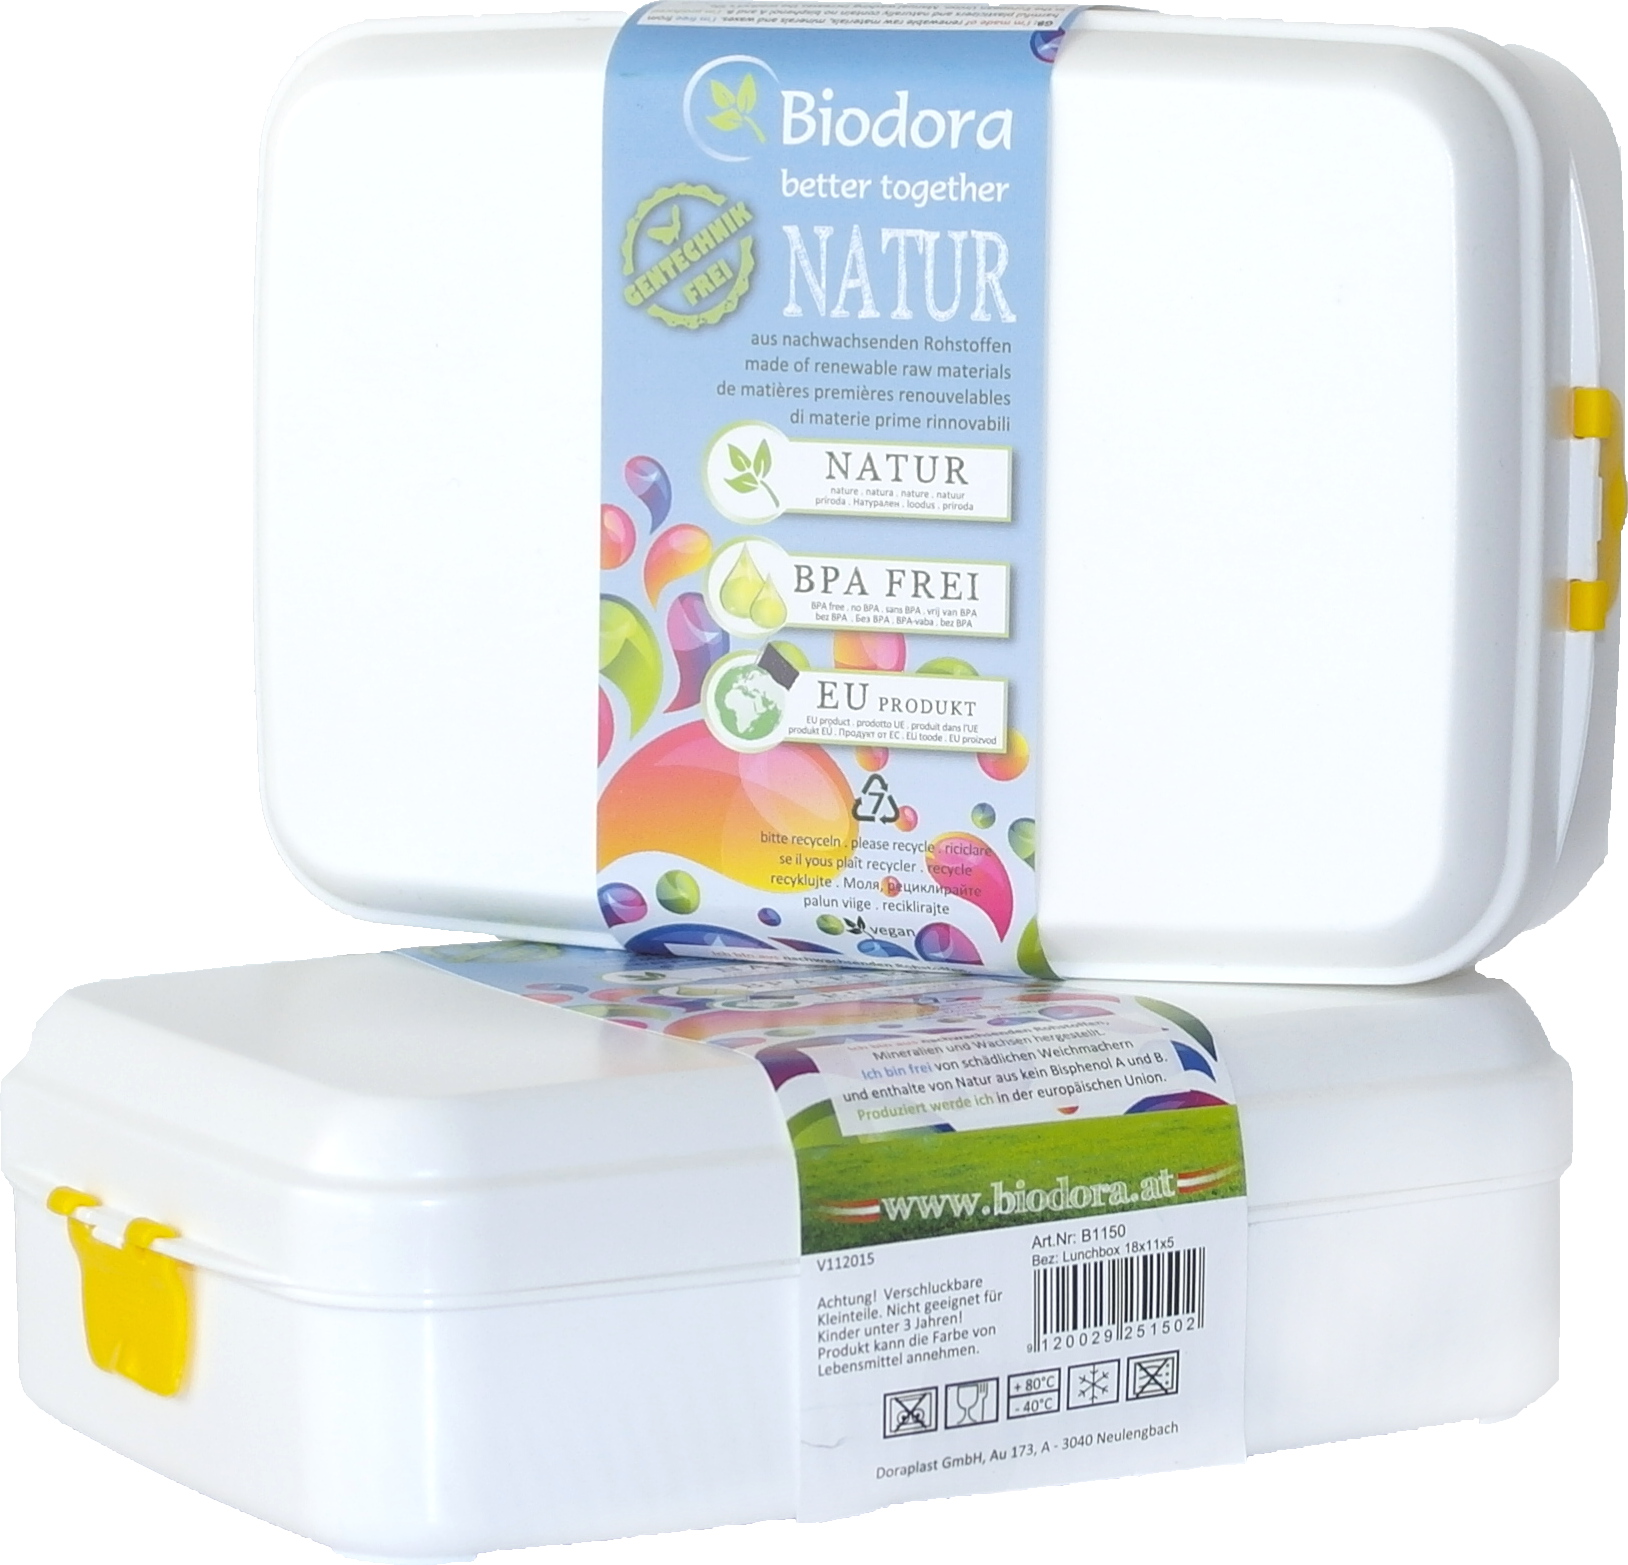 Biodora - storage box 0.8 liters (bio-plastic)